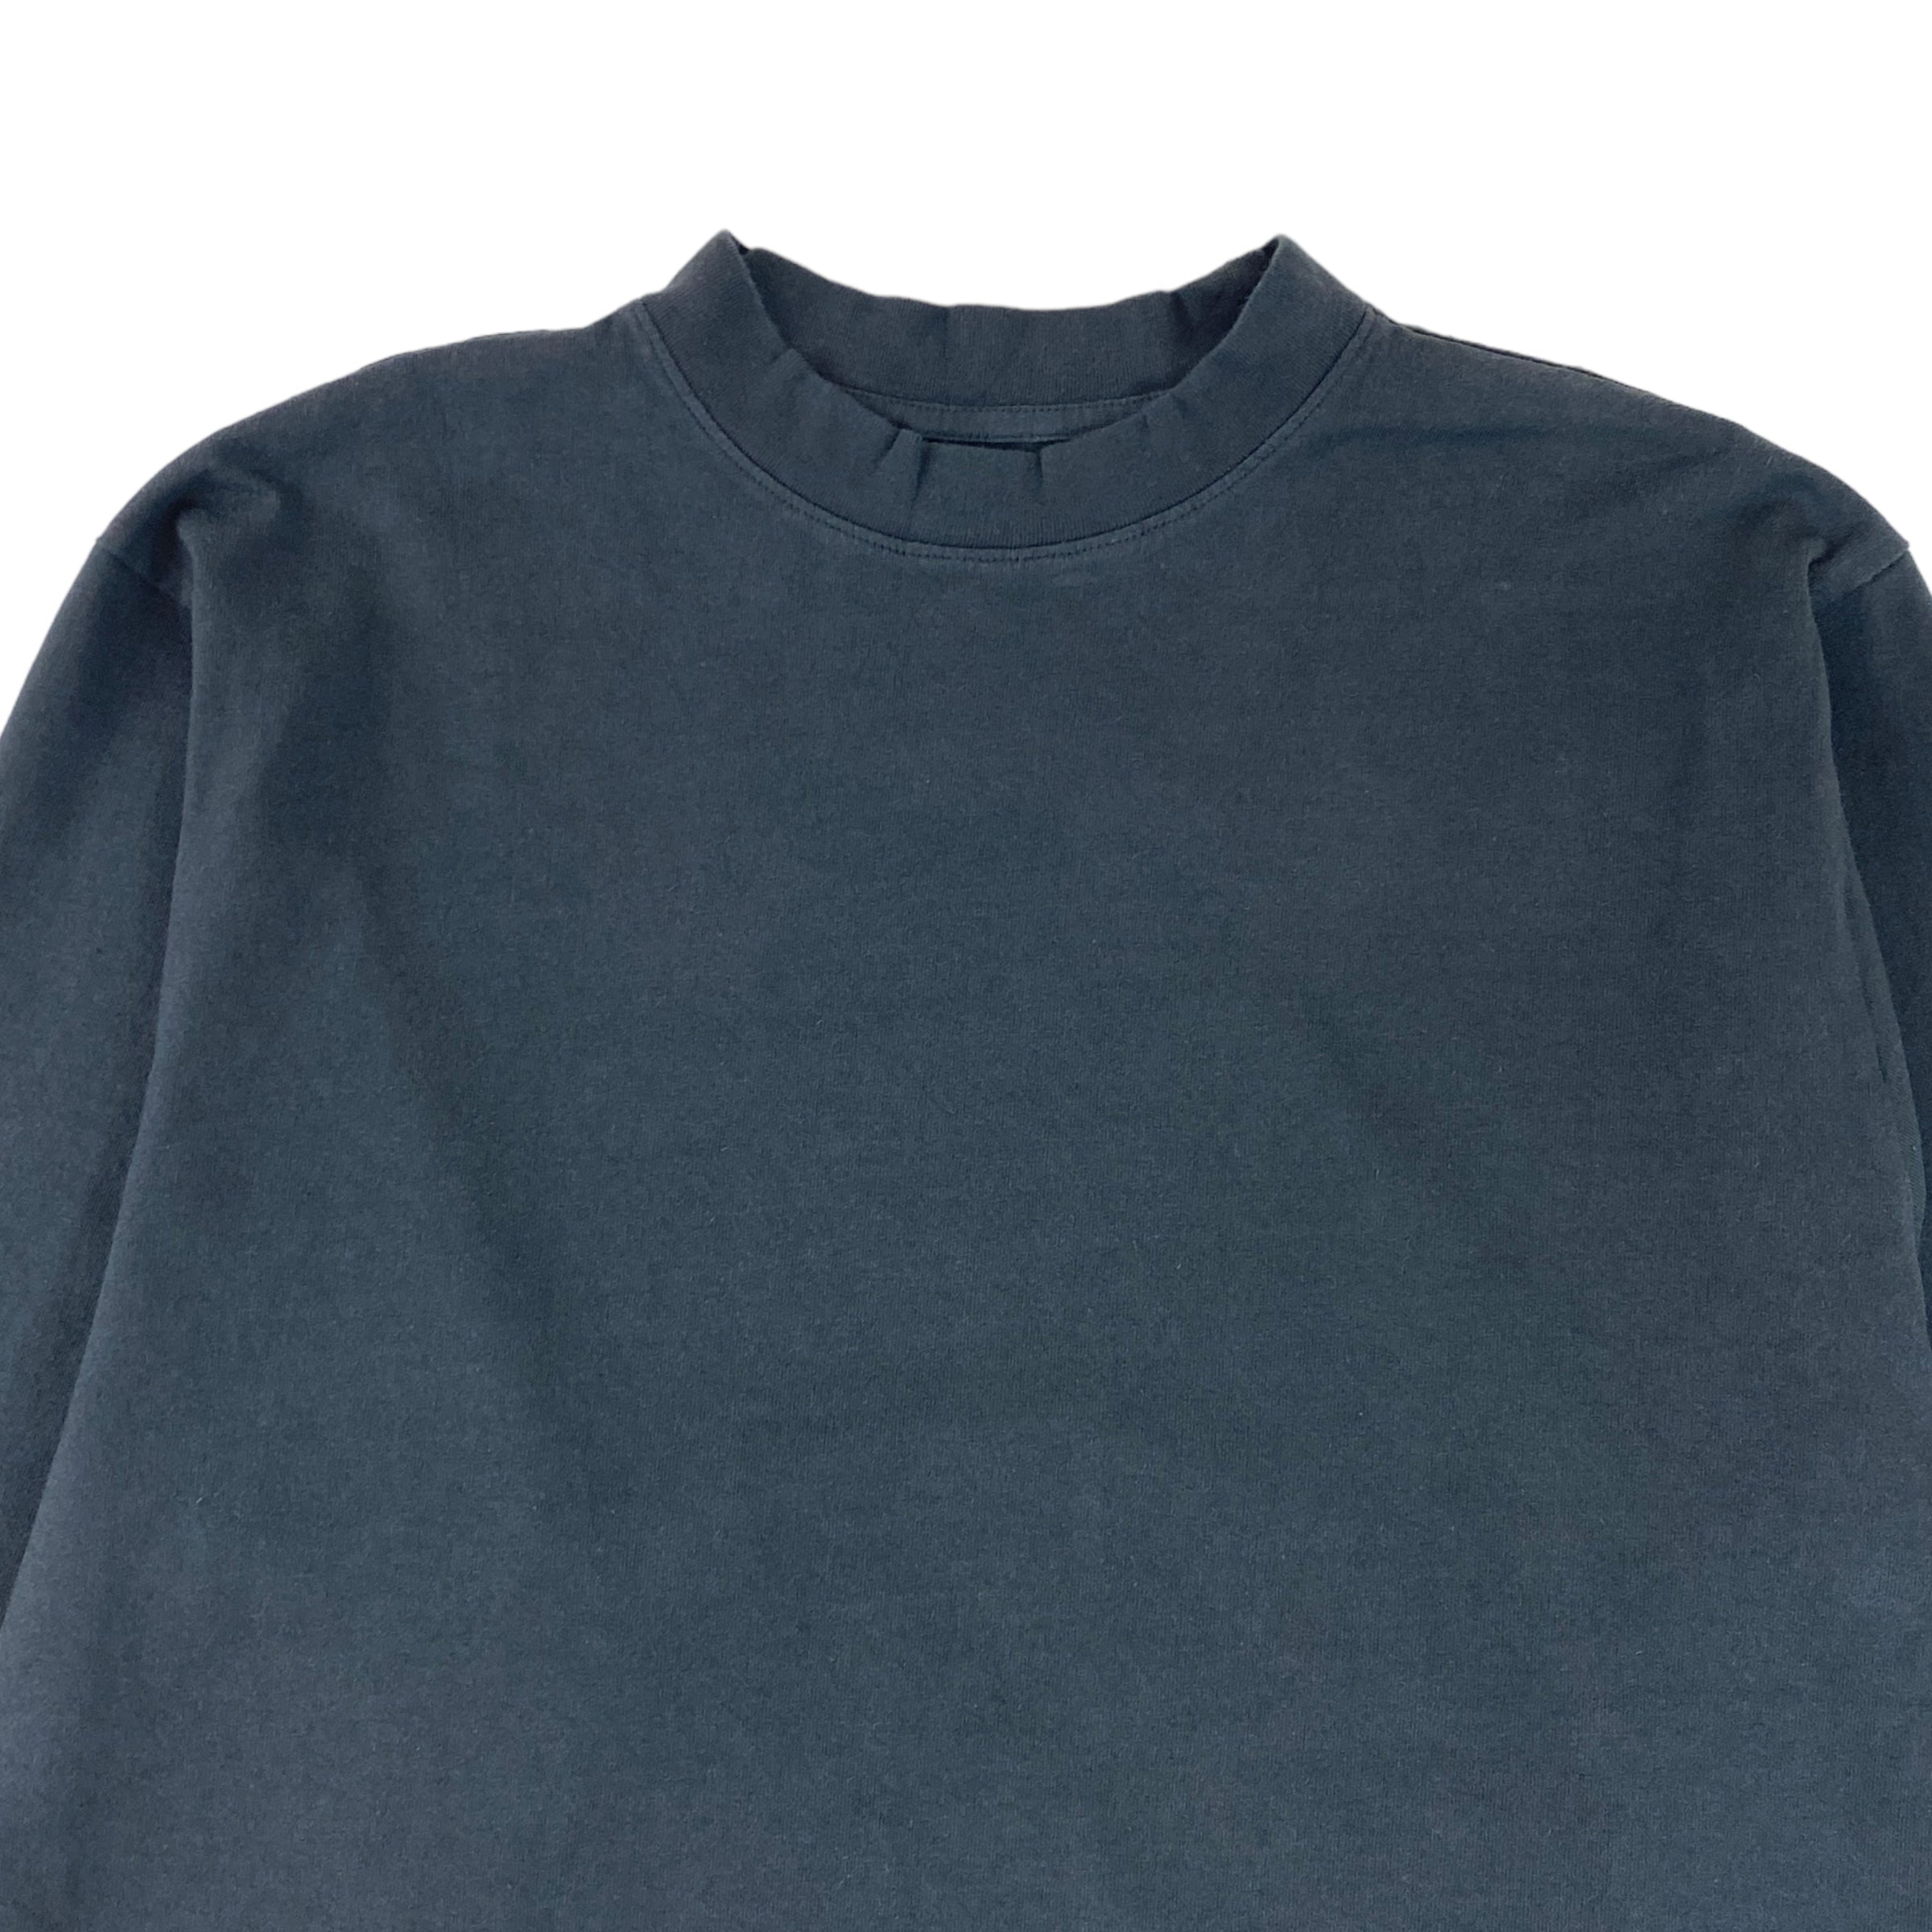 Yeezy x Gap Black Unreleased Longsleeve Shirt - Black Shirt